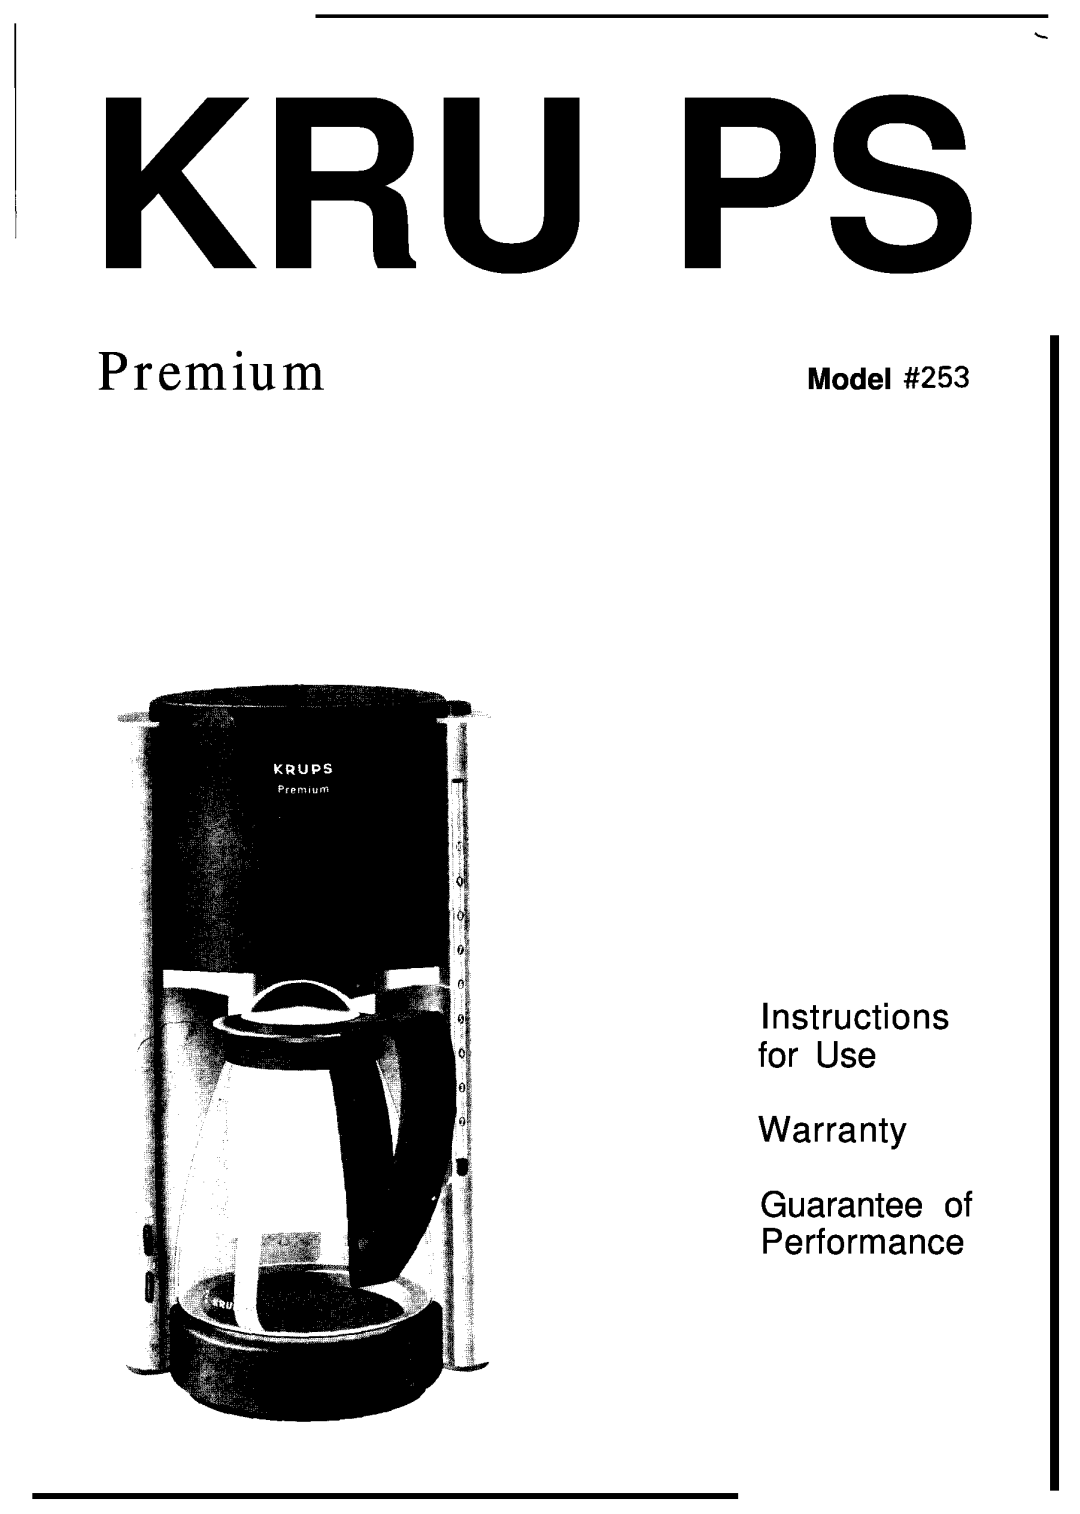 KitchenAid warranty Model #253, Kru Ps, Premium, Instructions for Use Warranty Guarantee of Performance 